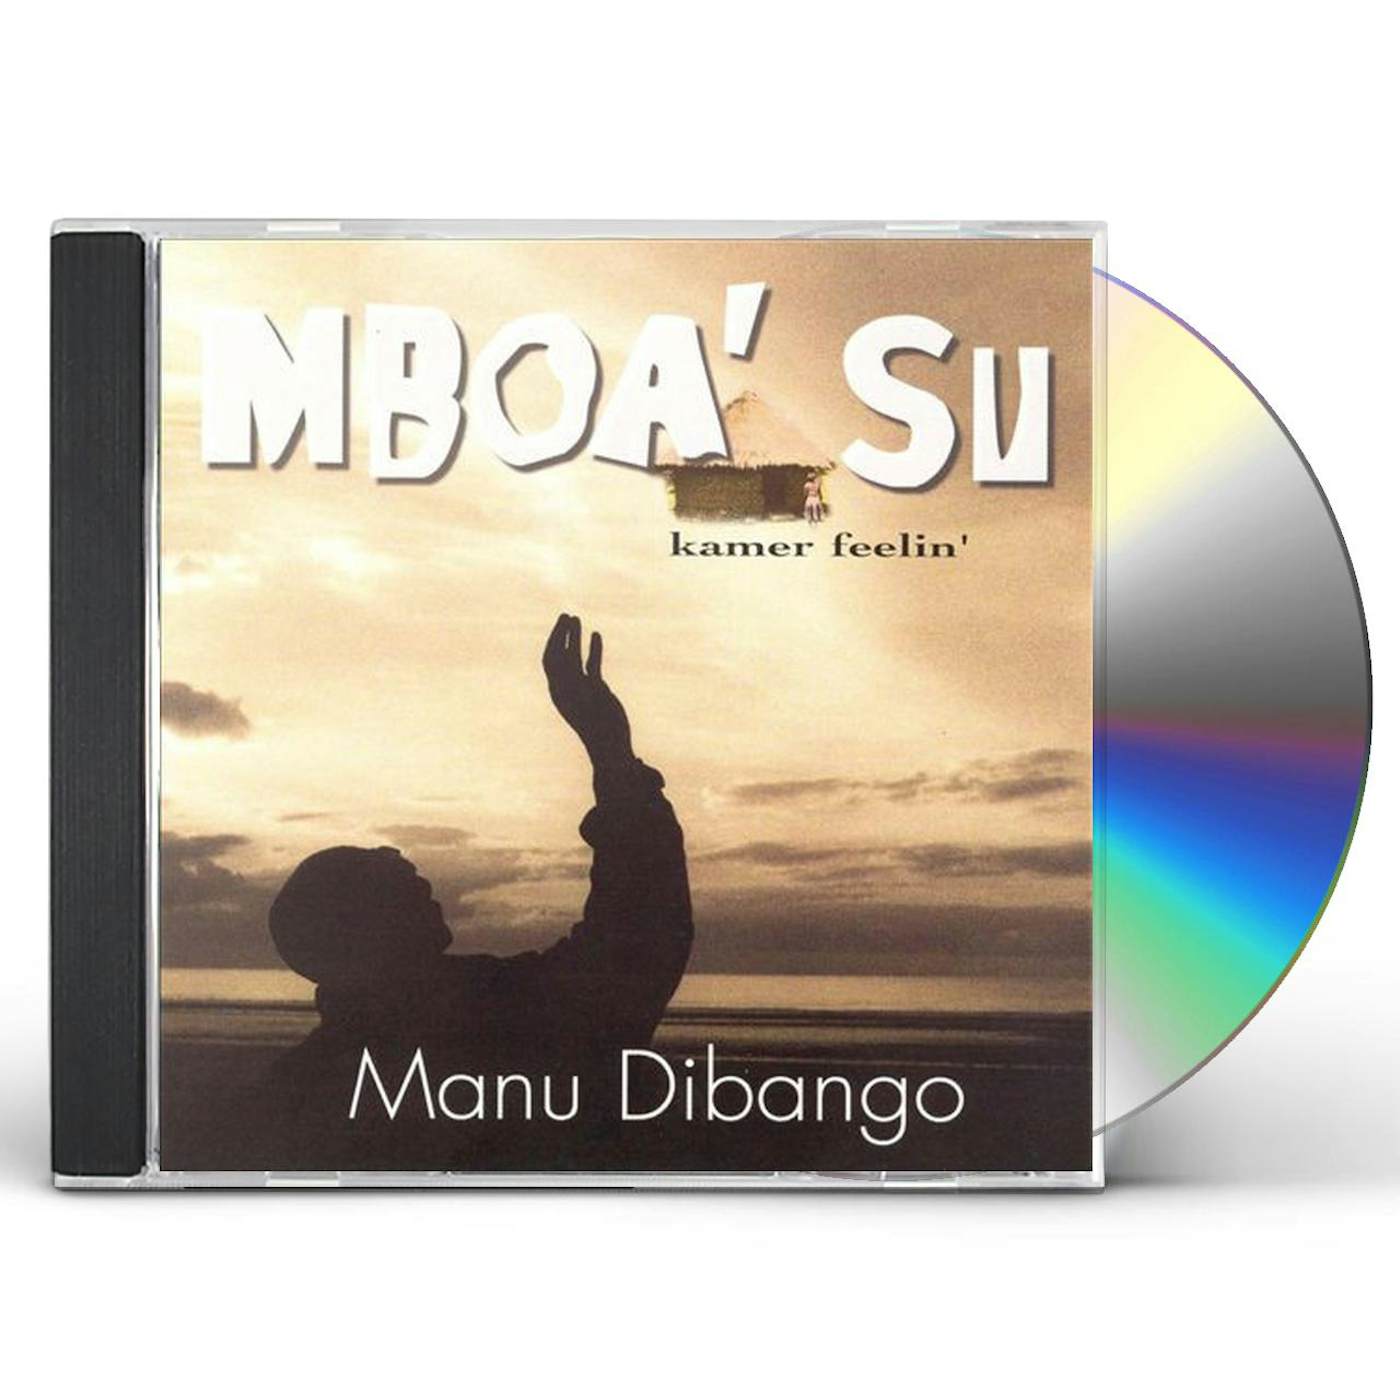 Manu Dibango MBOA' SU (KAMER FEELIN) CD